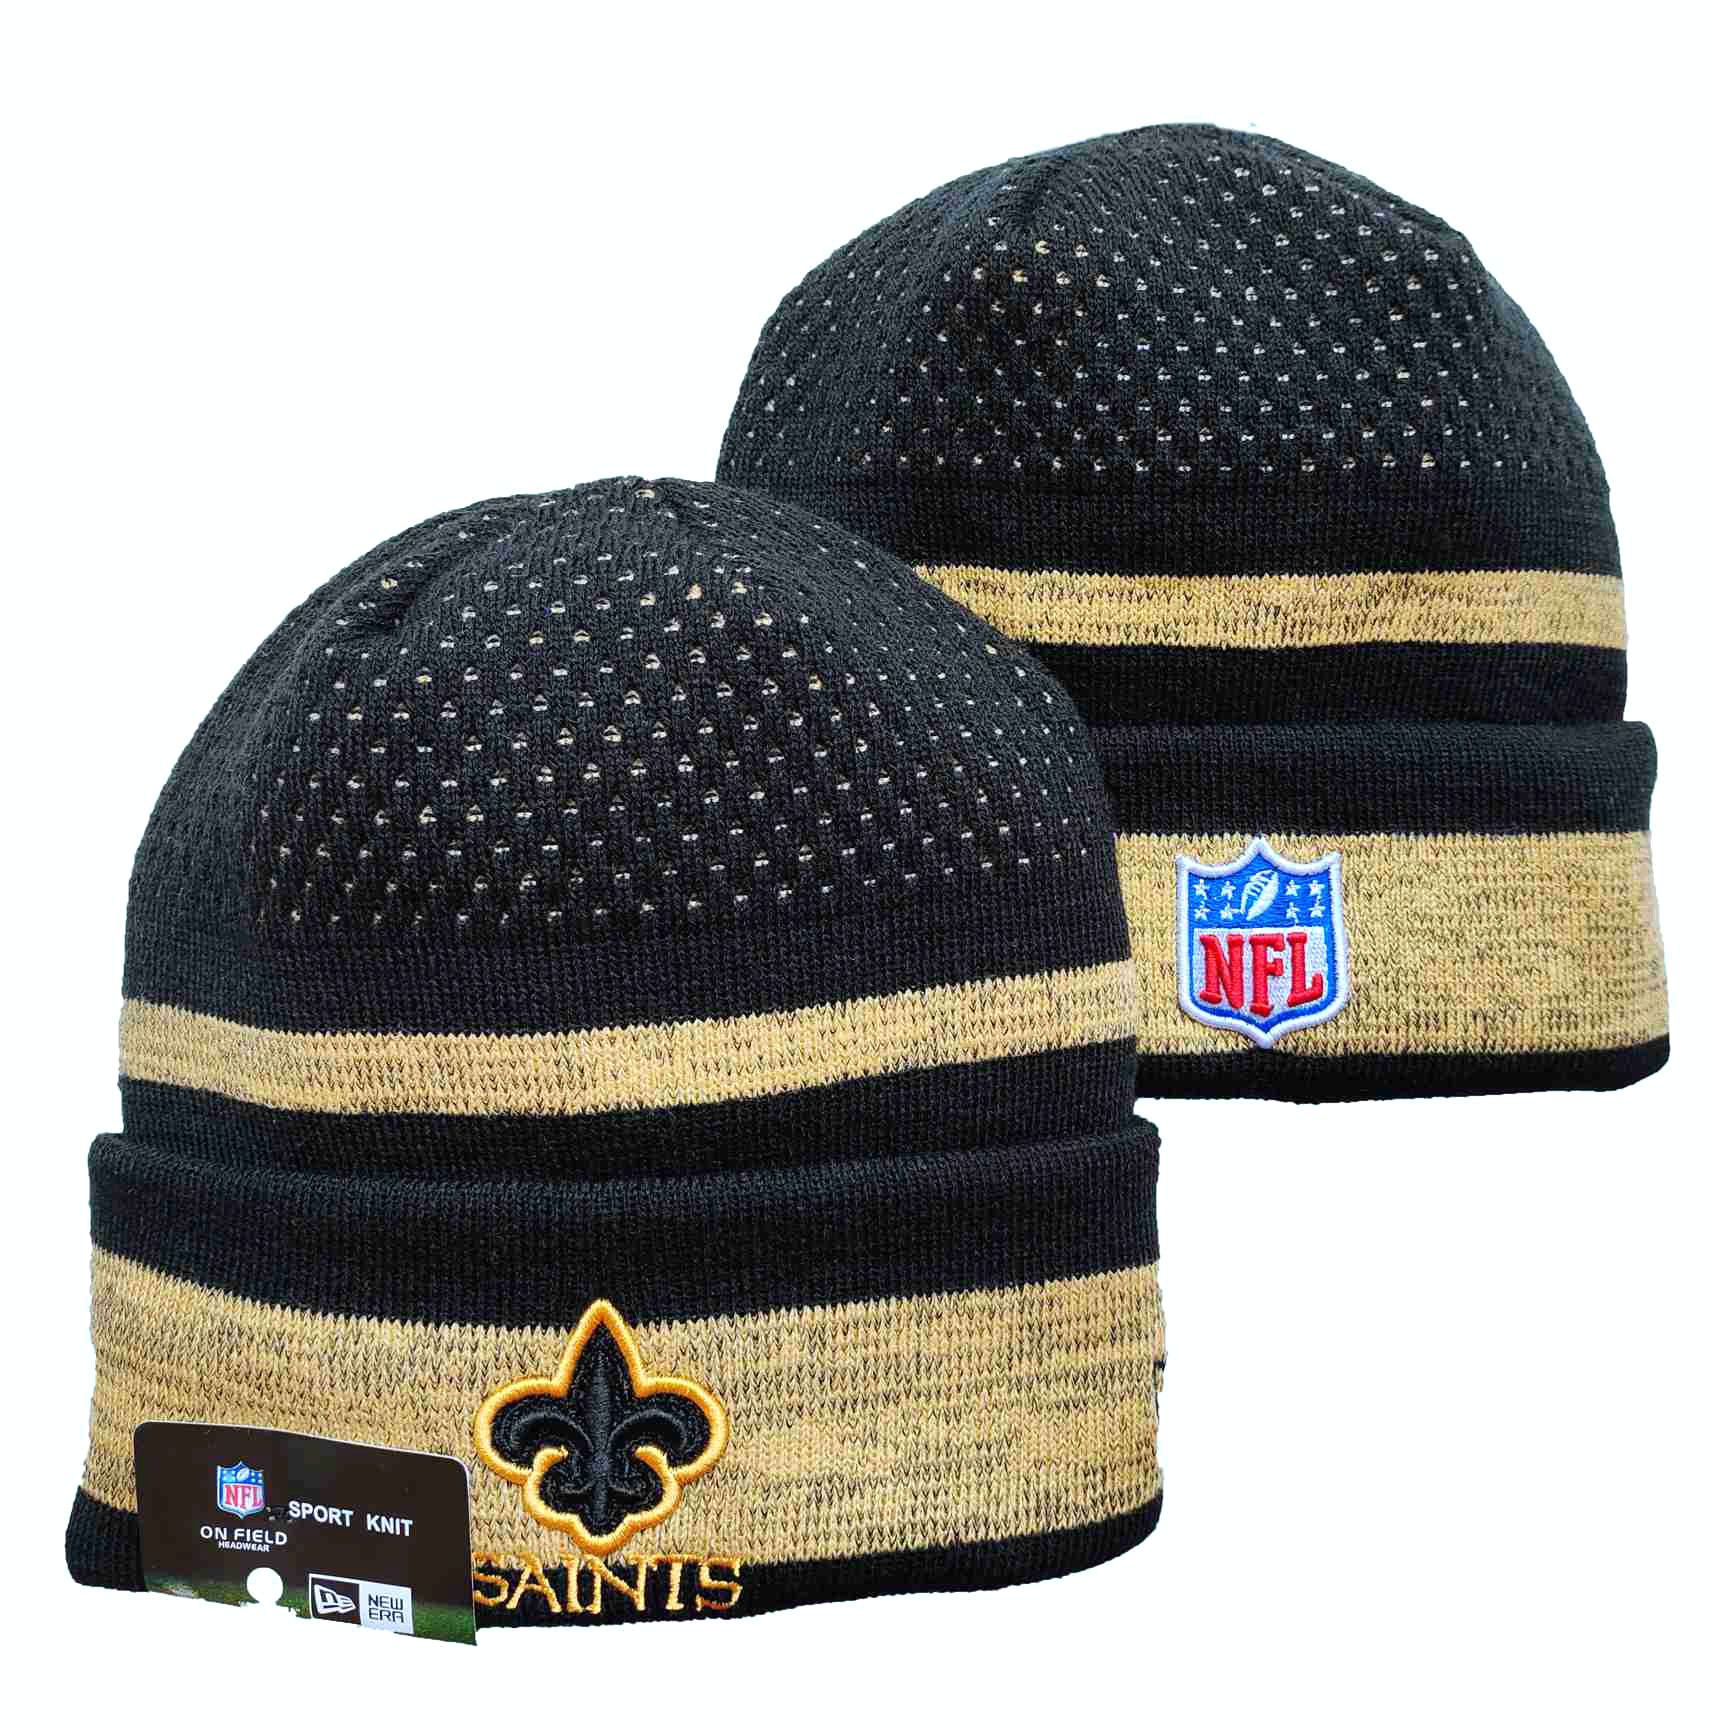 NFL New Orleans Saints Beanies Knit Hats-YD1043